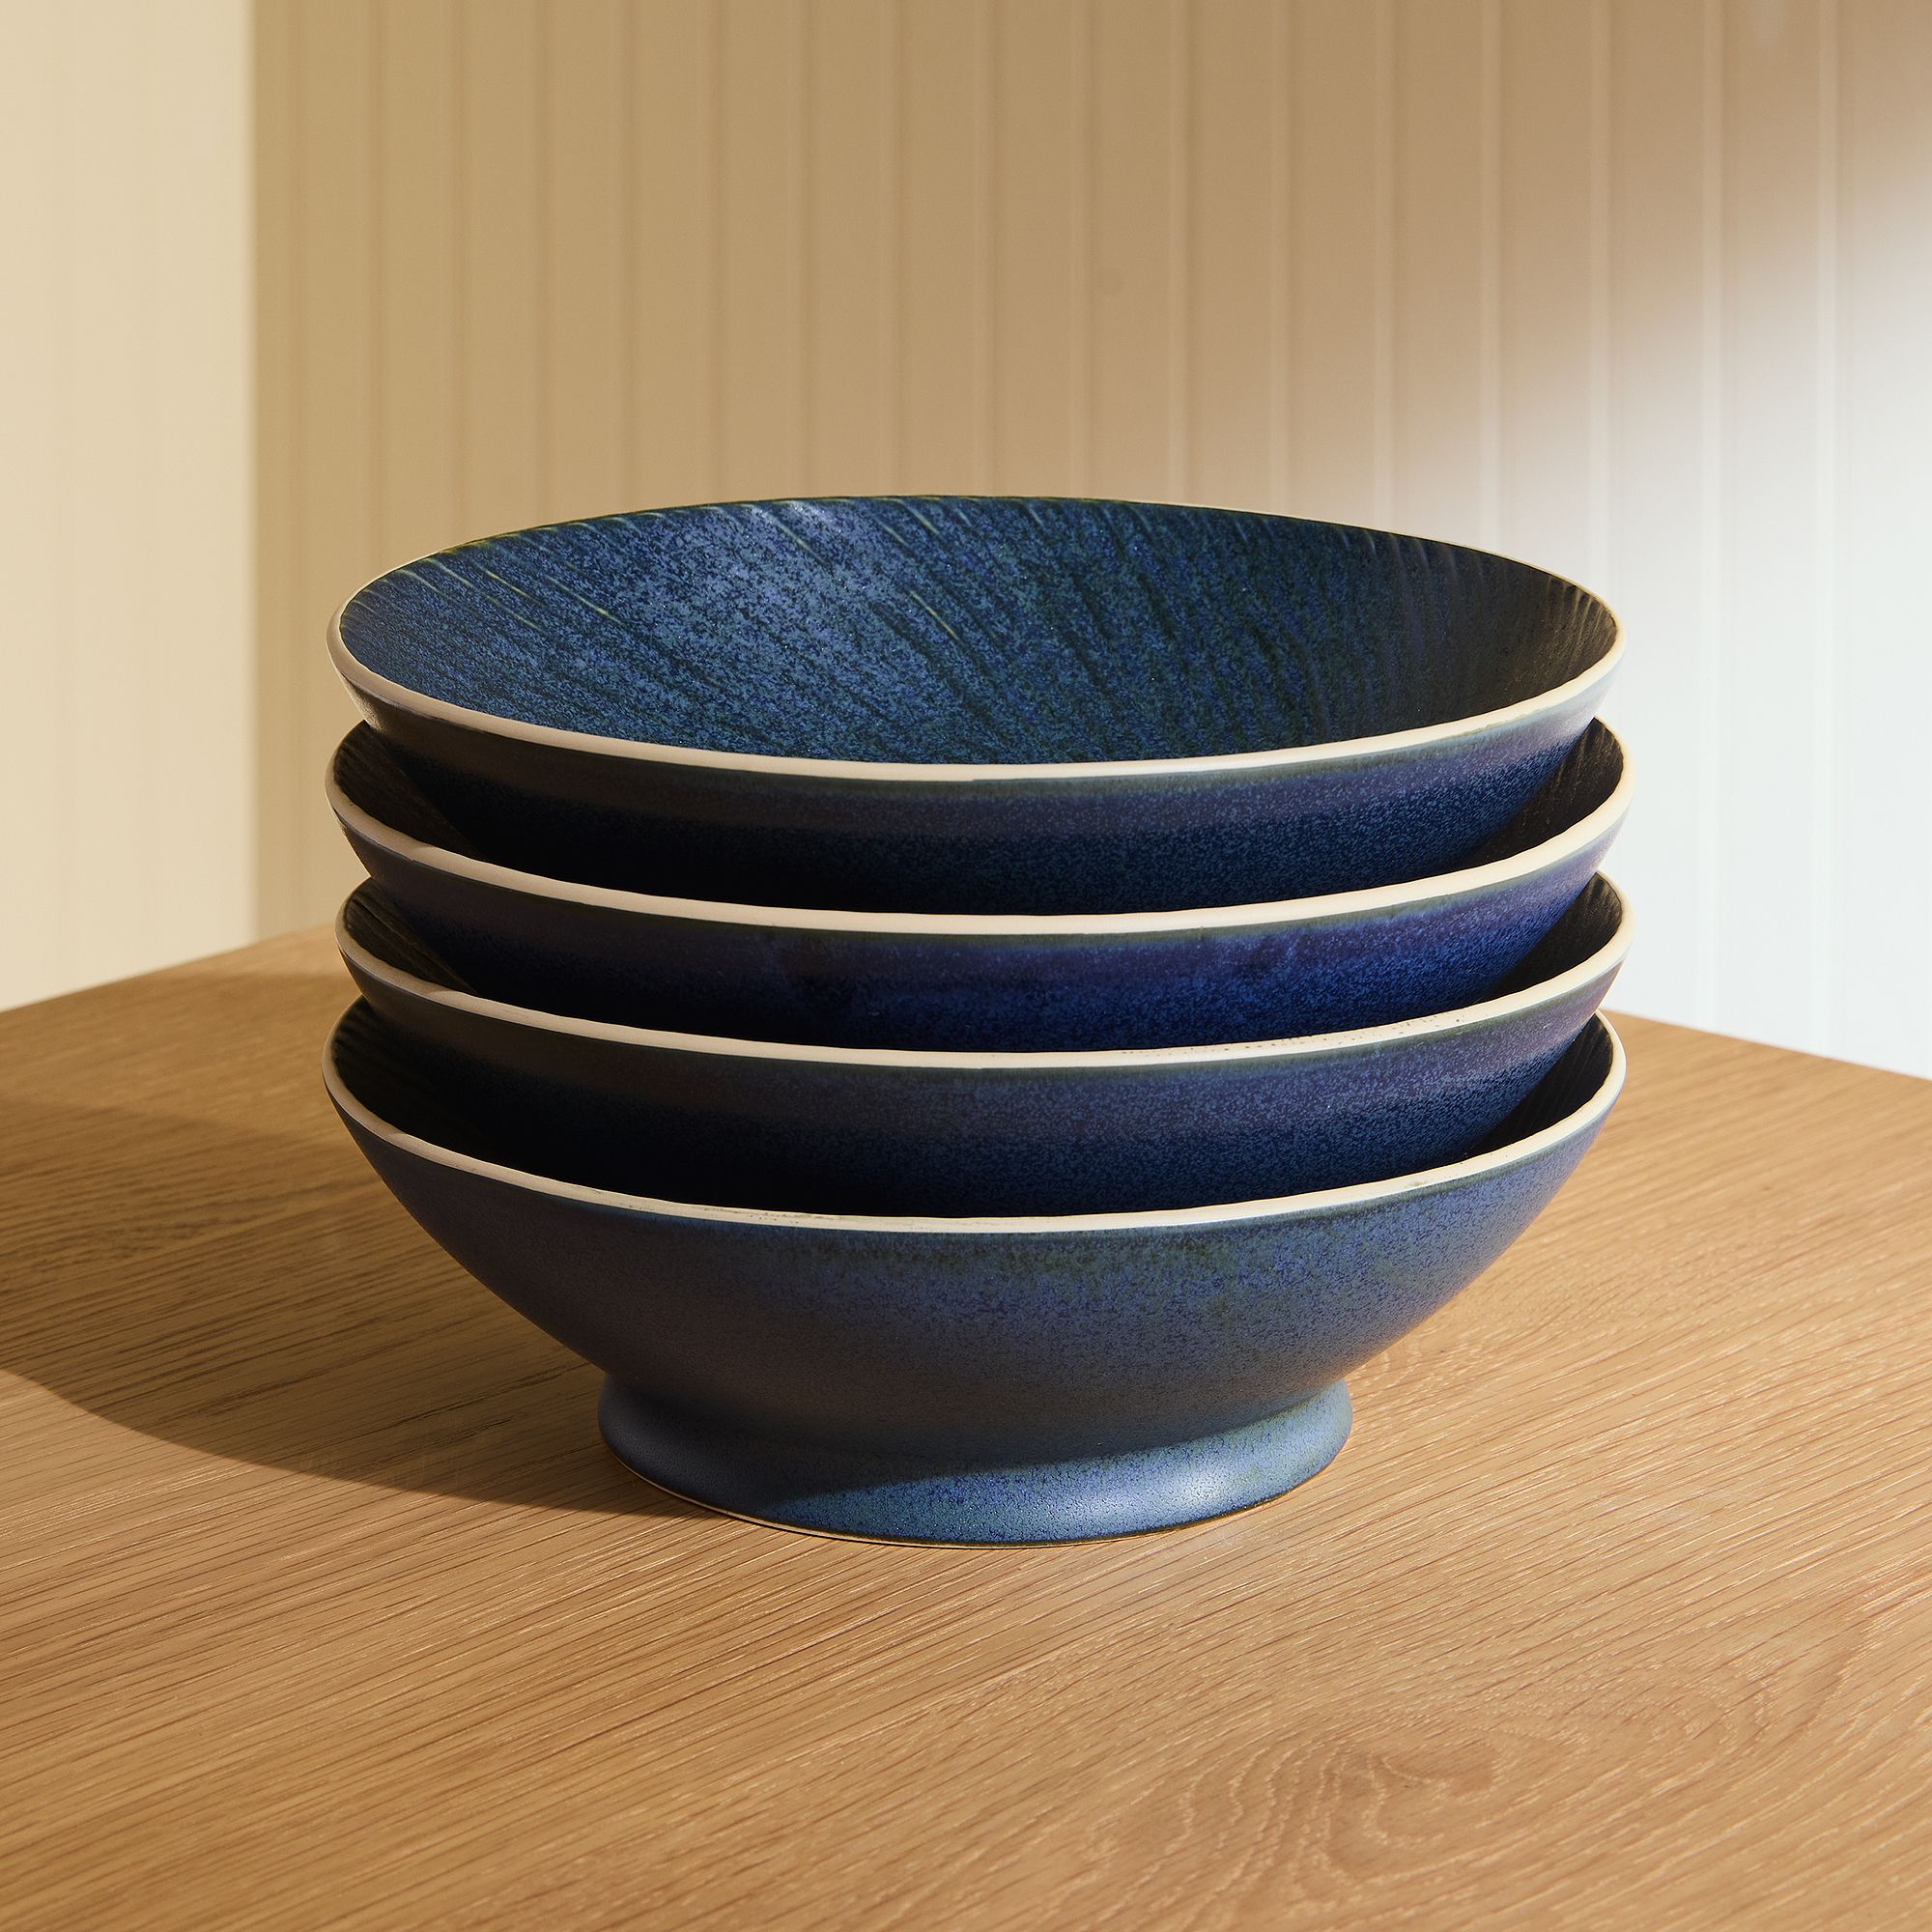 Marcus Samuelsson Carved Pattern Pasta Bowl Sets | West Elm